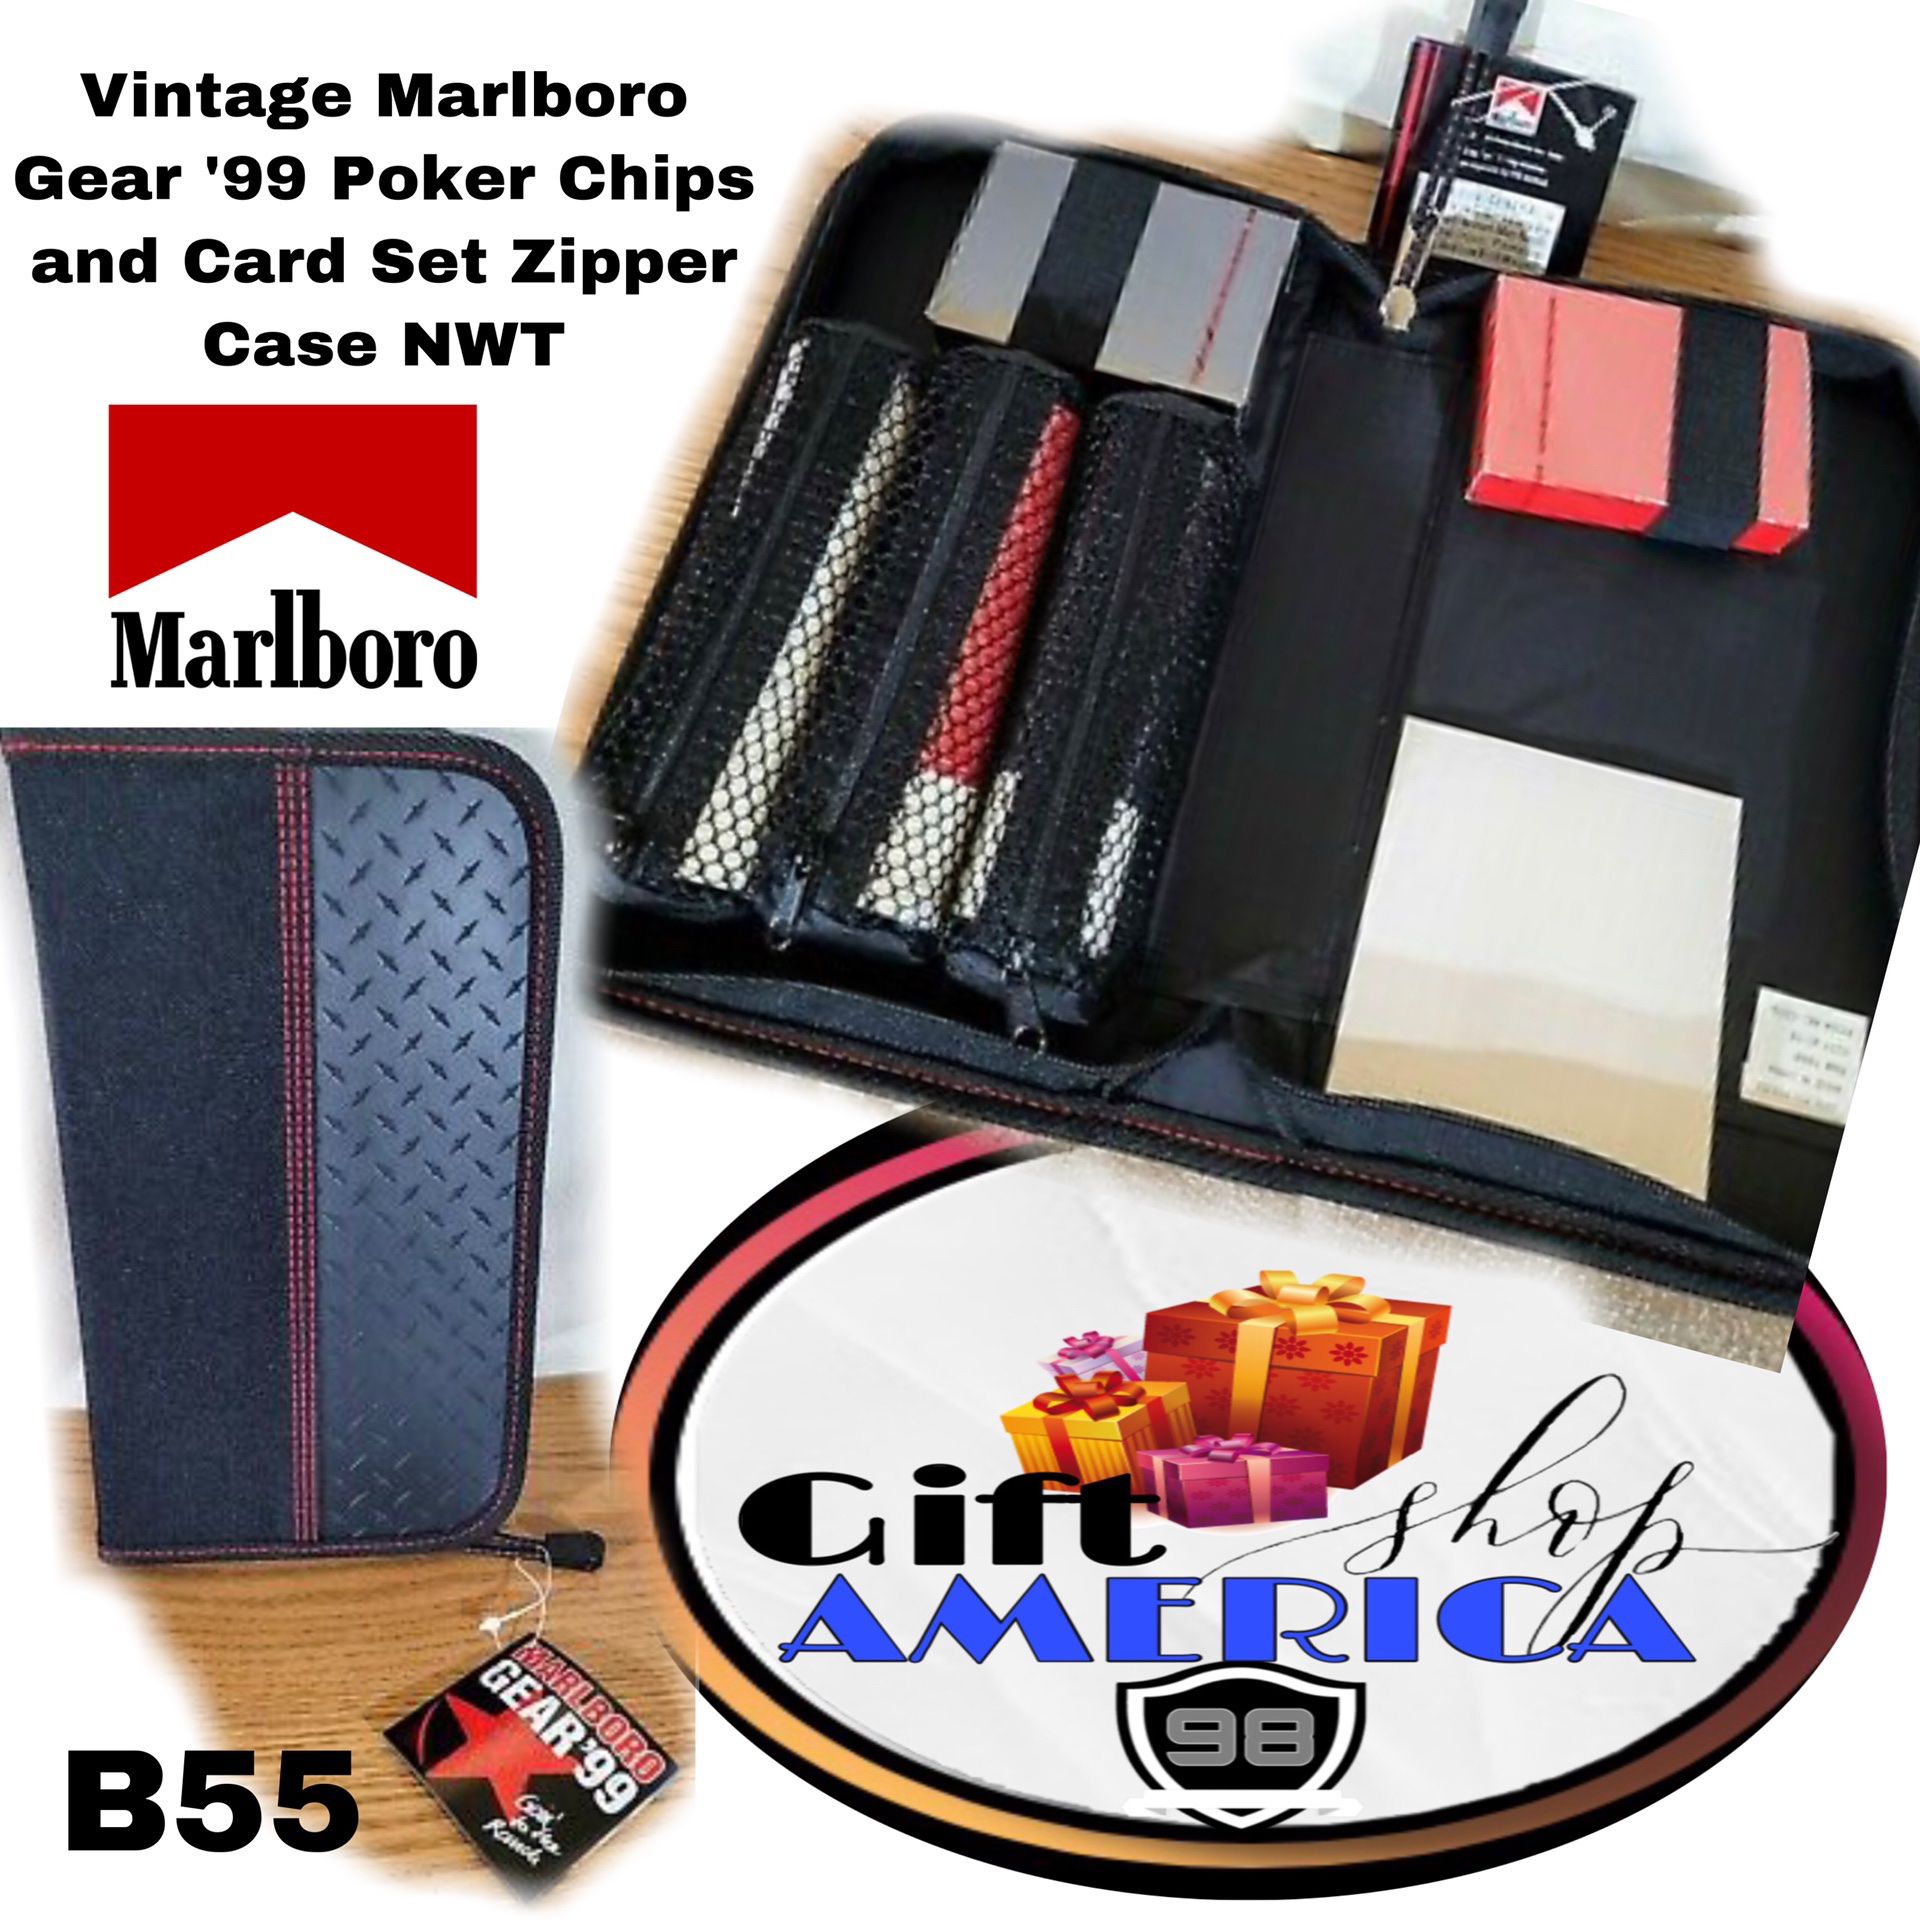 Vintage Marlboro Gear '99 Poker Chips and Card Set Zipper Case NWT B55